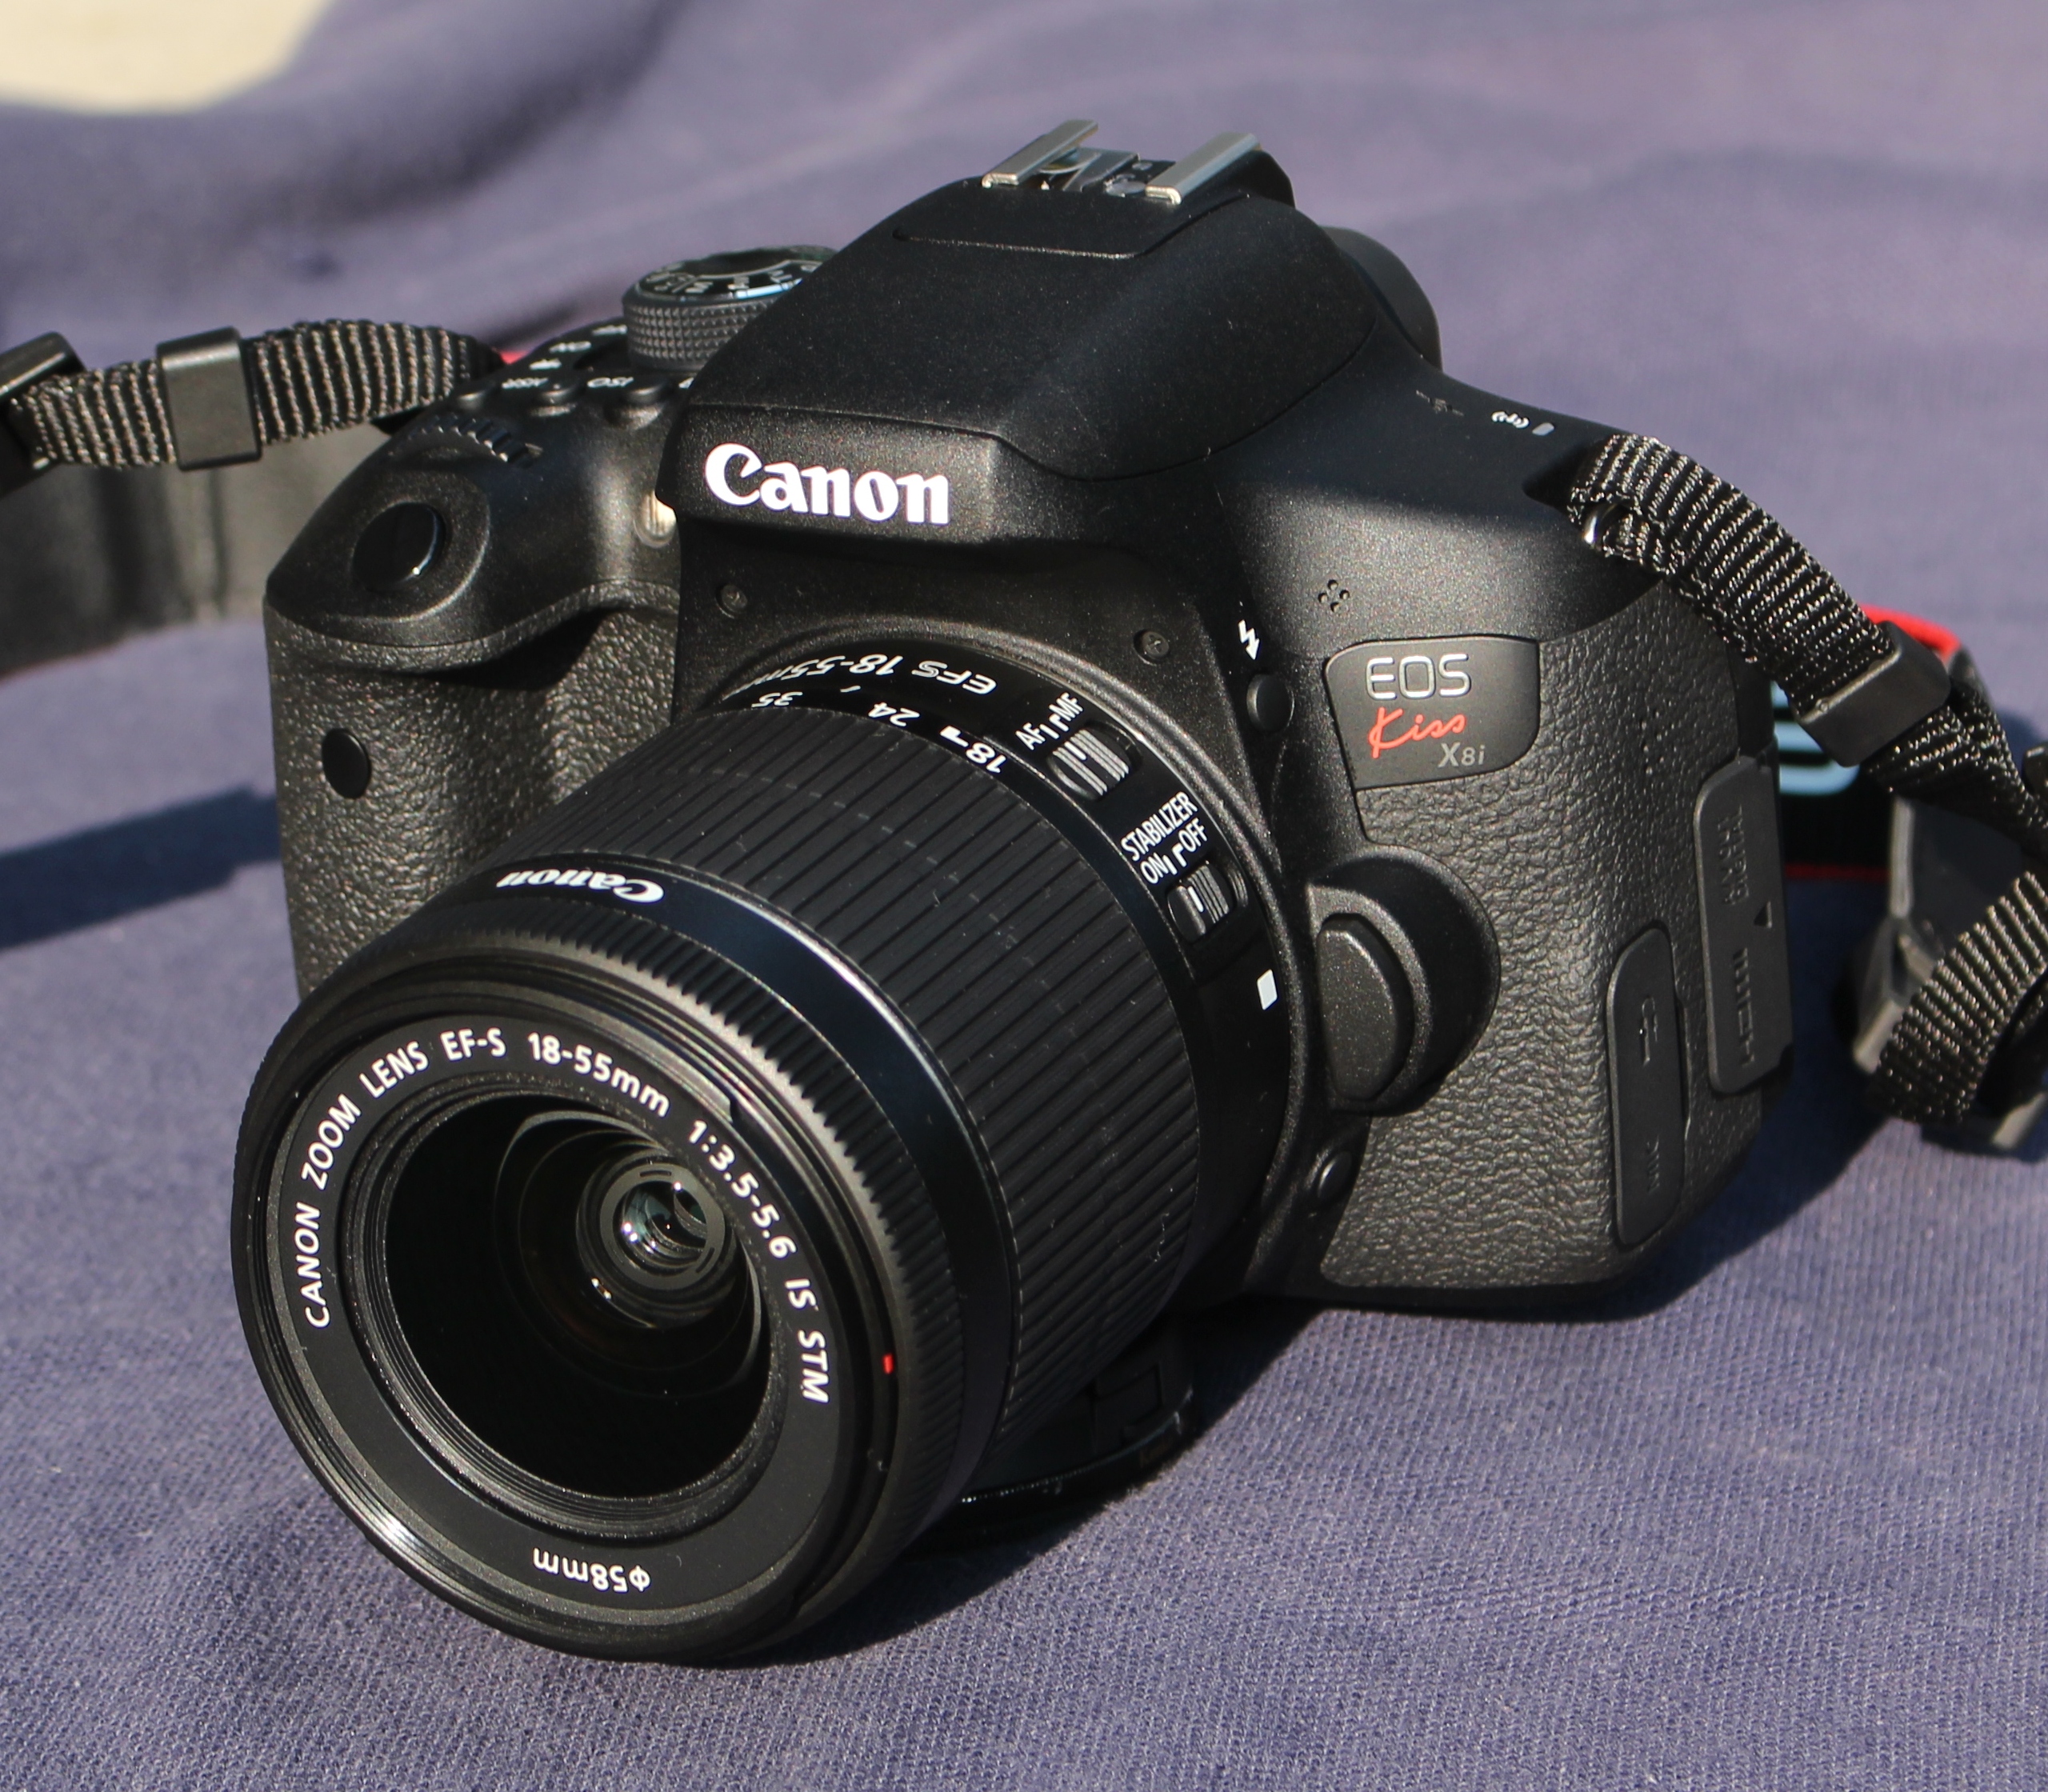 File:Canon EOS Kiss X8i.jpg - Wikimedia Commons